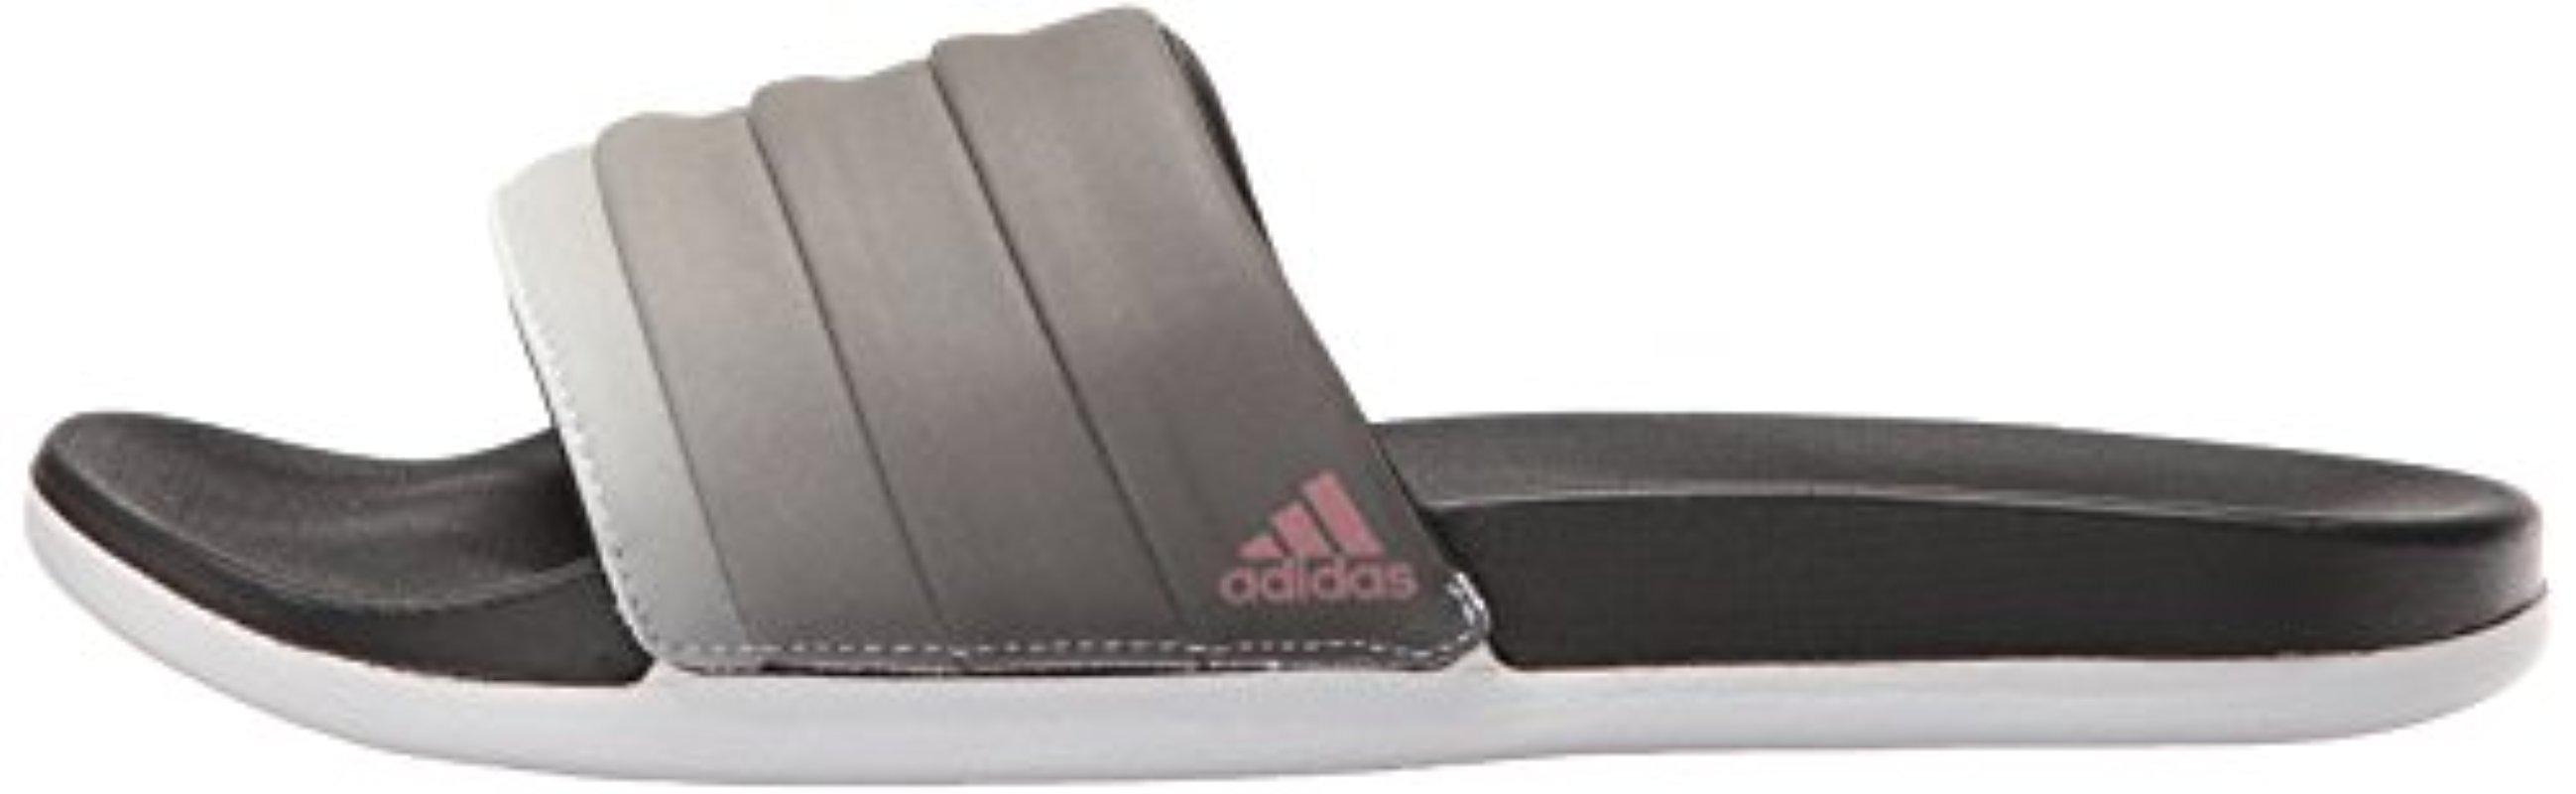 adidas women's adilette cf  armad athletic slide sandals